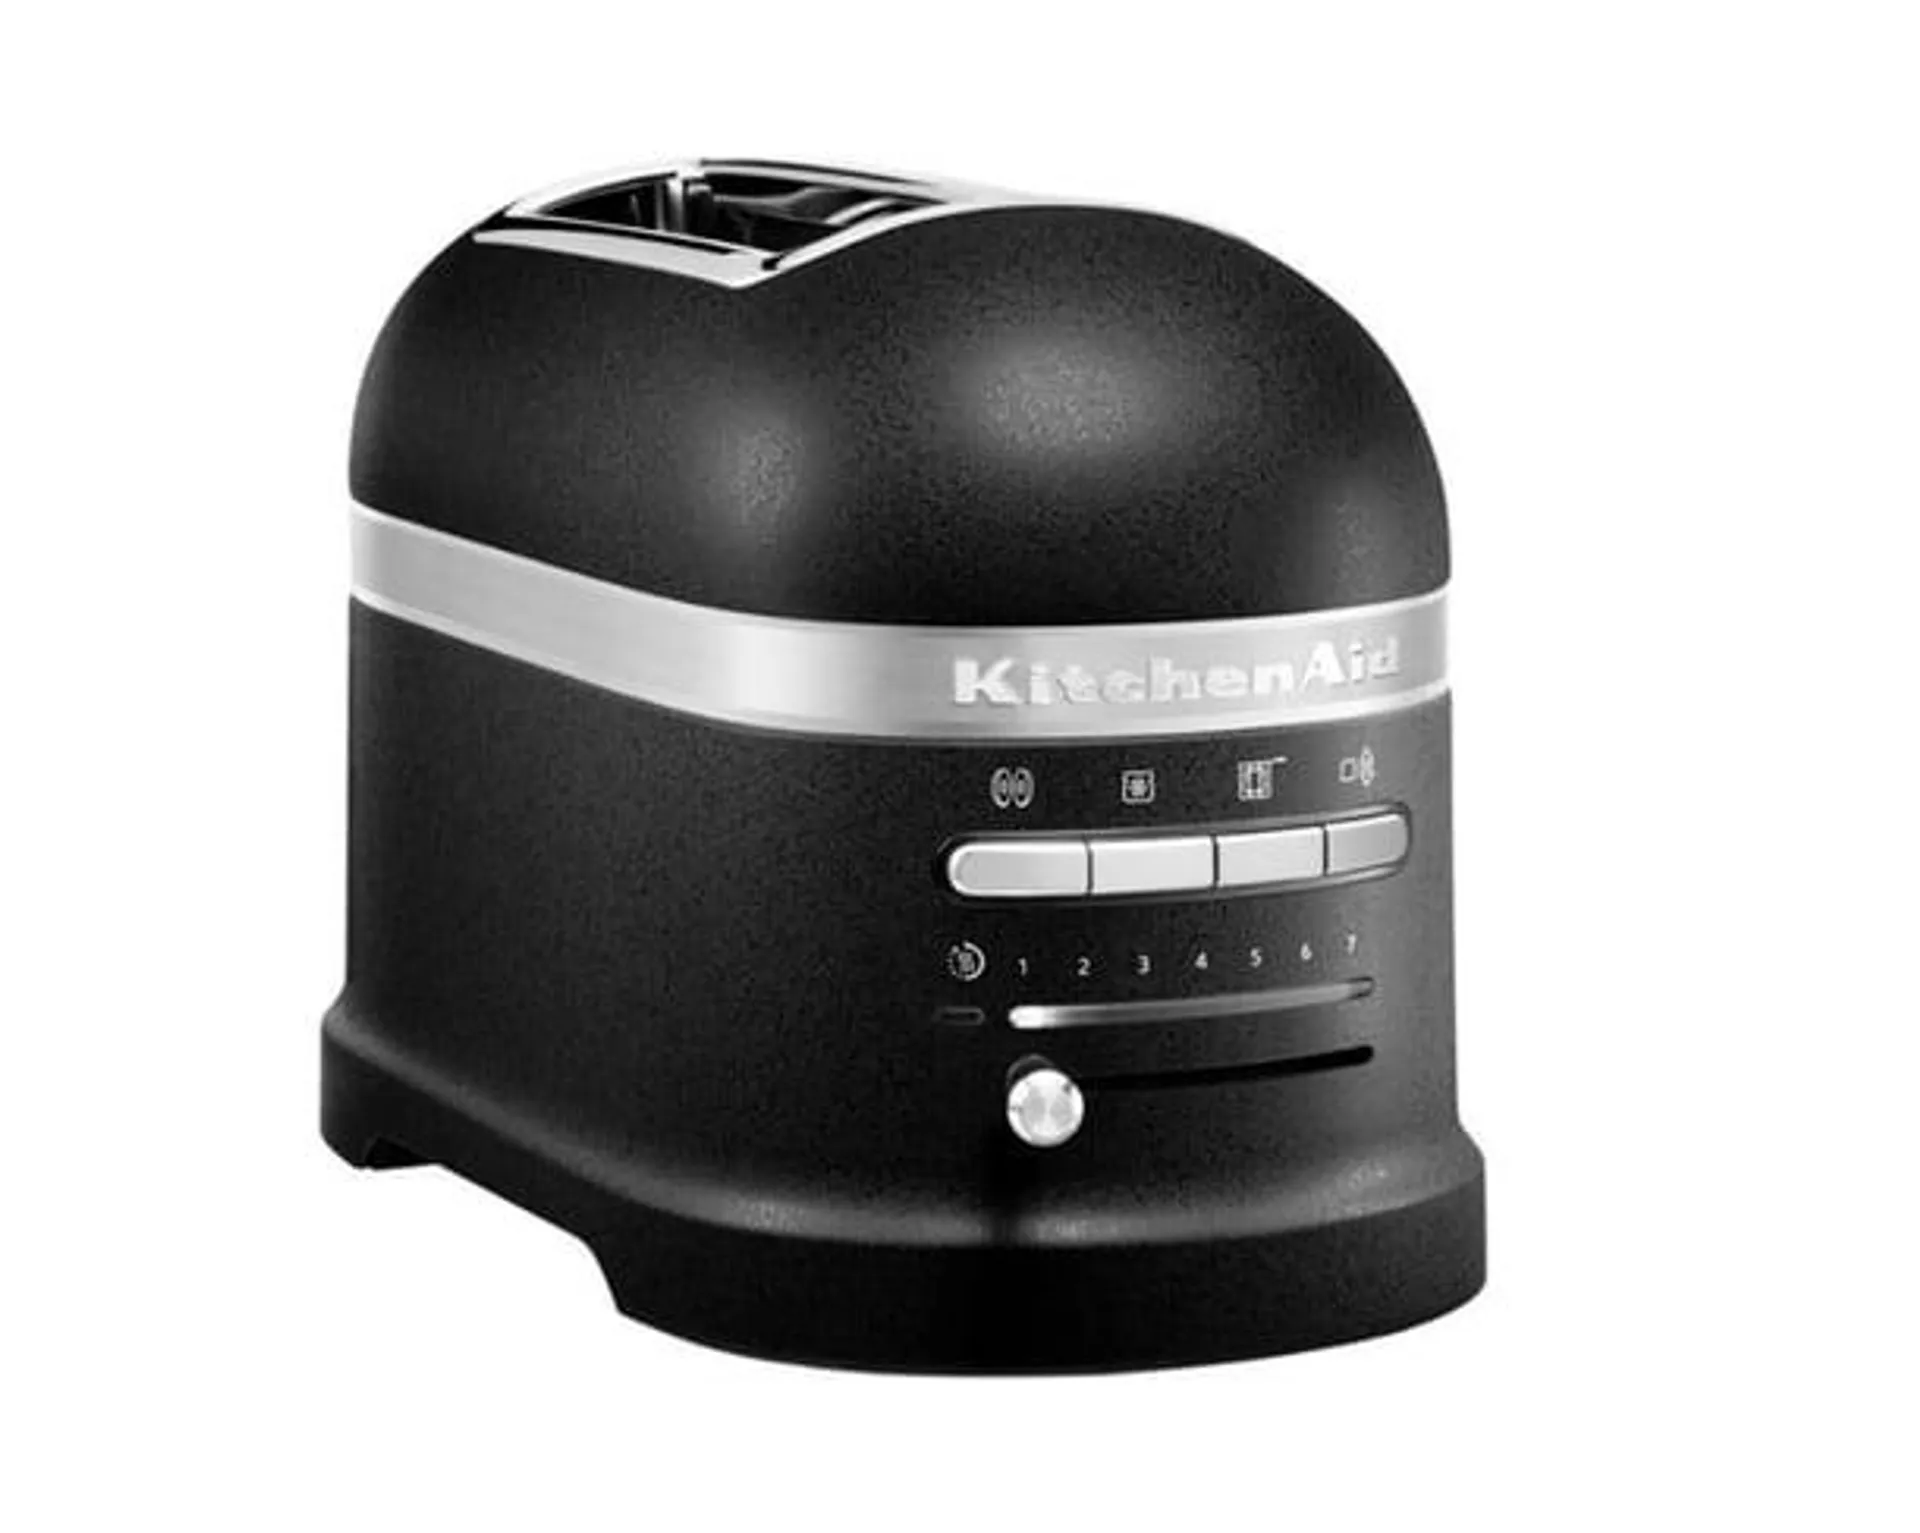 KitchenAid 5KMT2204 Artisan 2 Yuvalı Ekmek Kızartma Makinesi Cast Iron Black